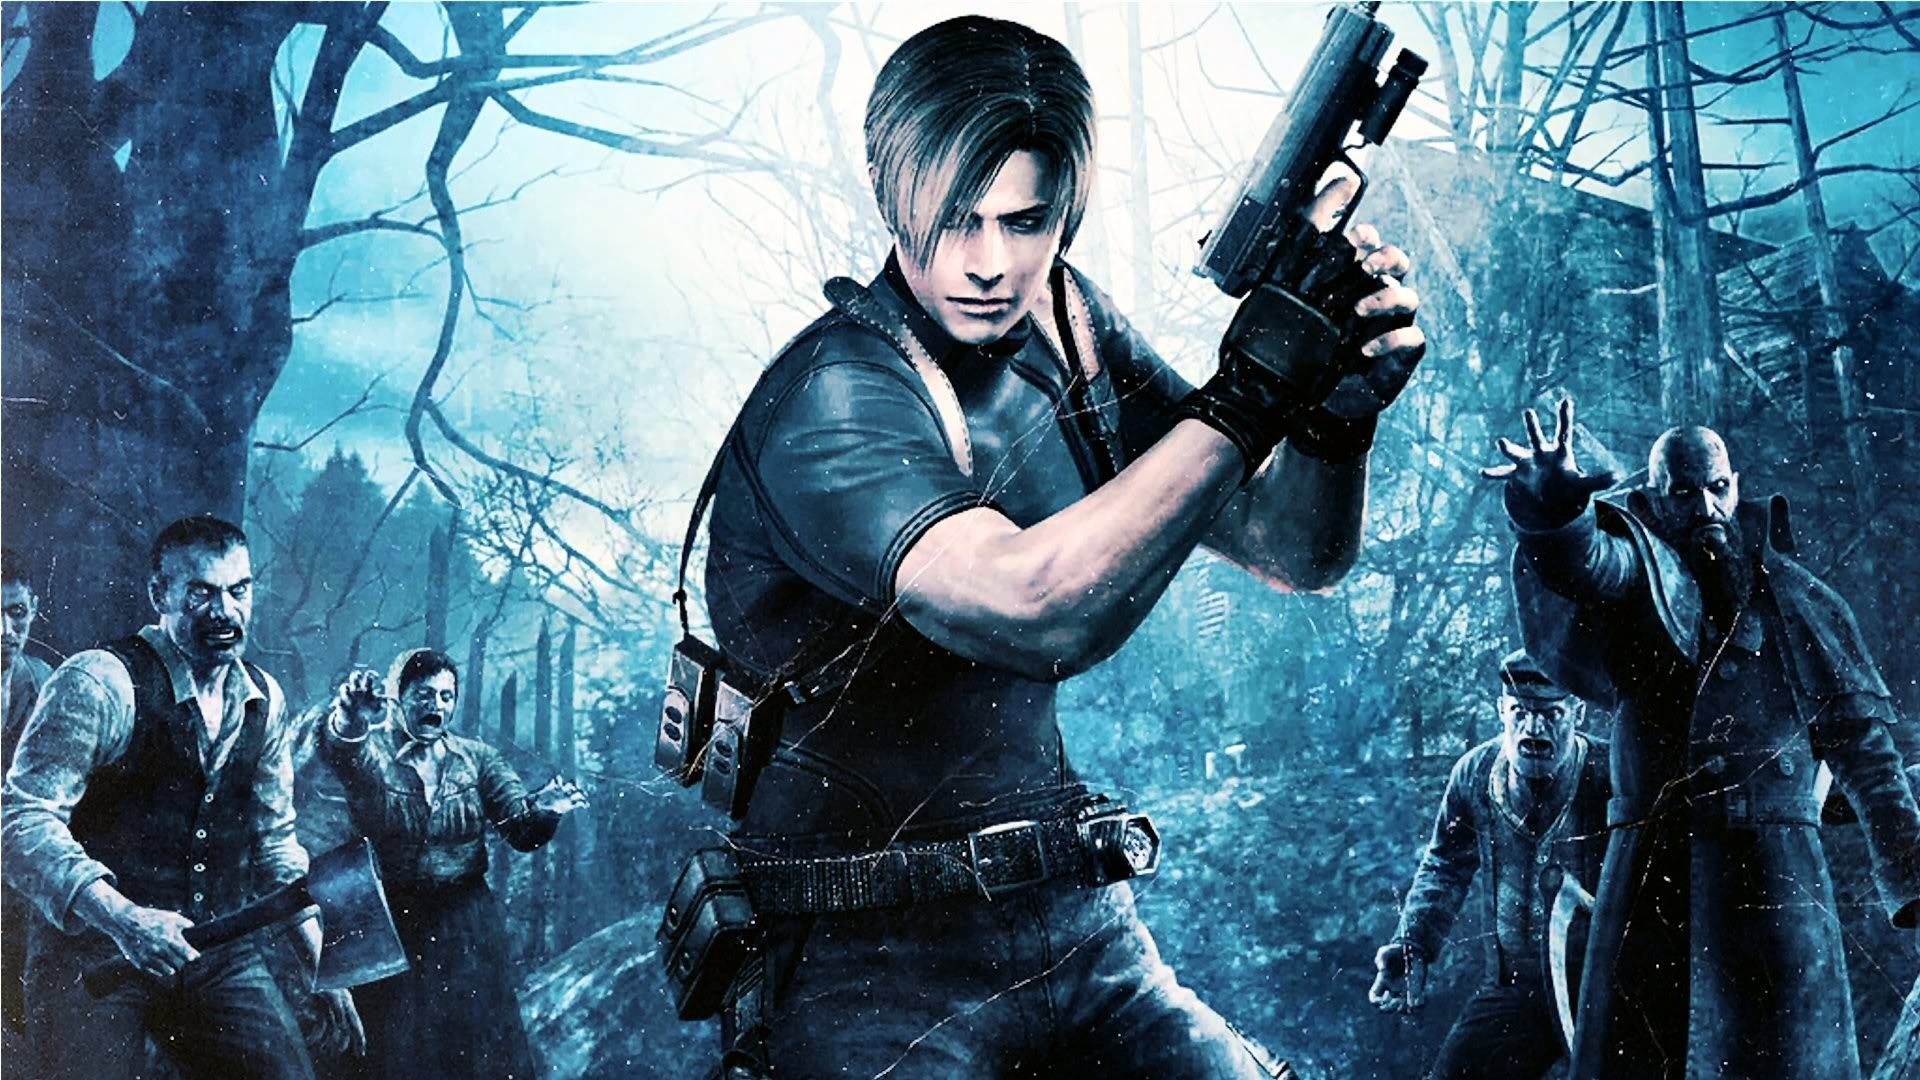 Alice Resident Evil 1080P 2K 4K 5K HD wallpapers free download   Wallpaper Flare